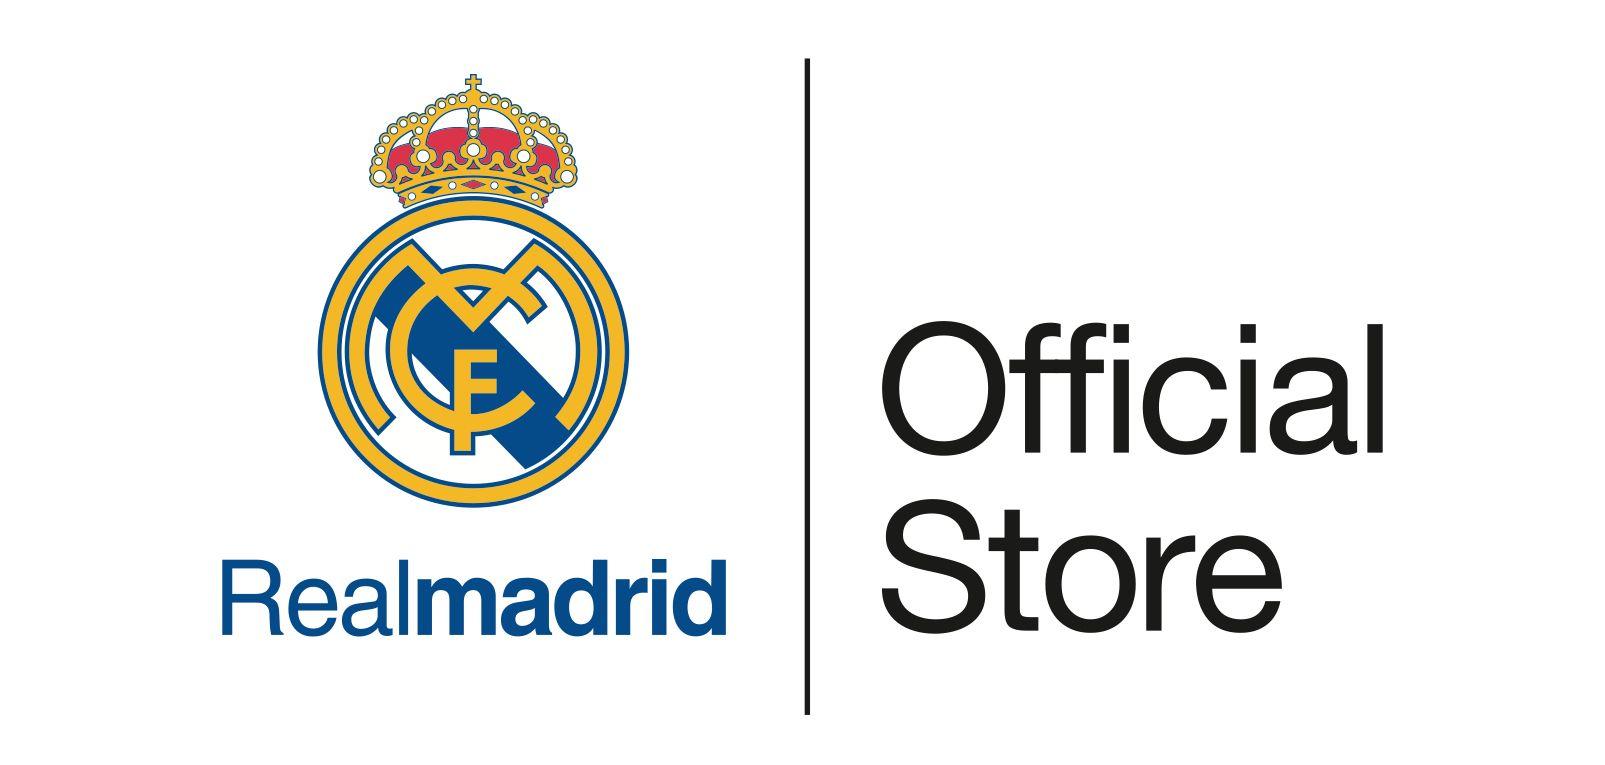 Adidas Real Madrid Logo - Real Madrid Official Store, Gran Vía 31 | sanzpont [arquitectura]